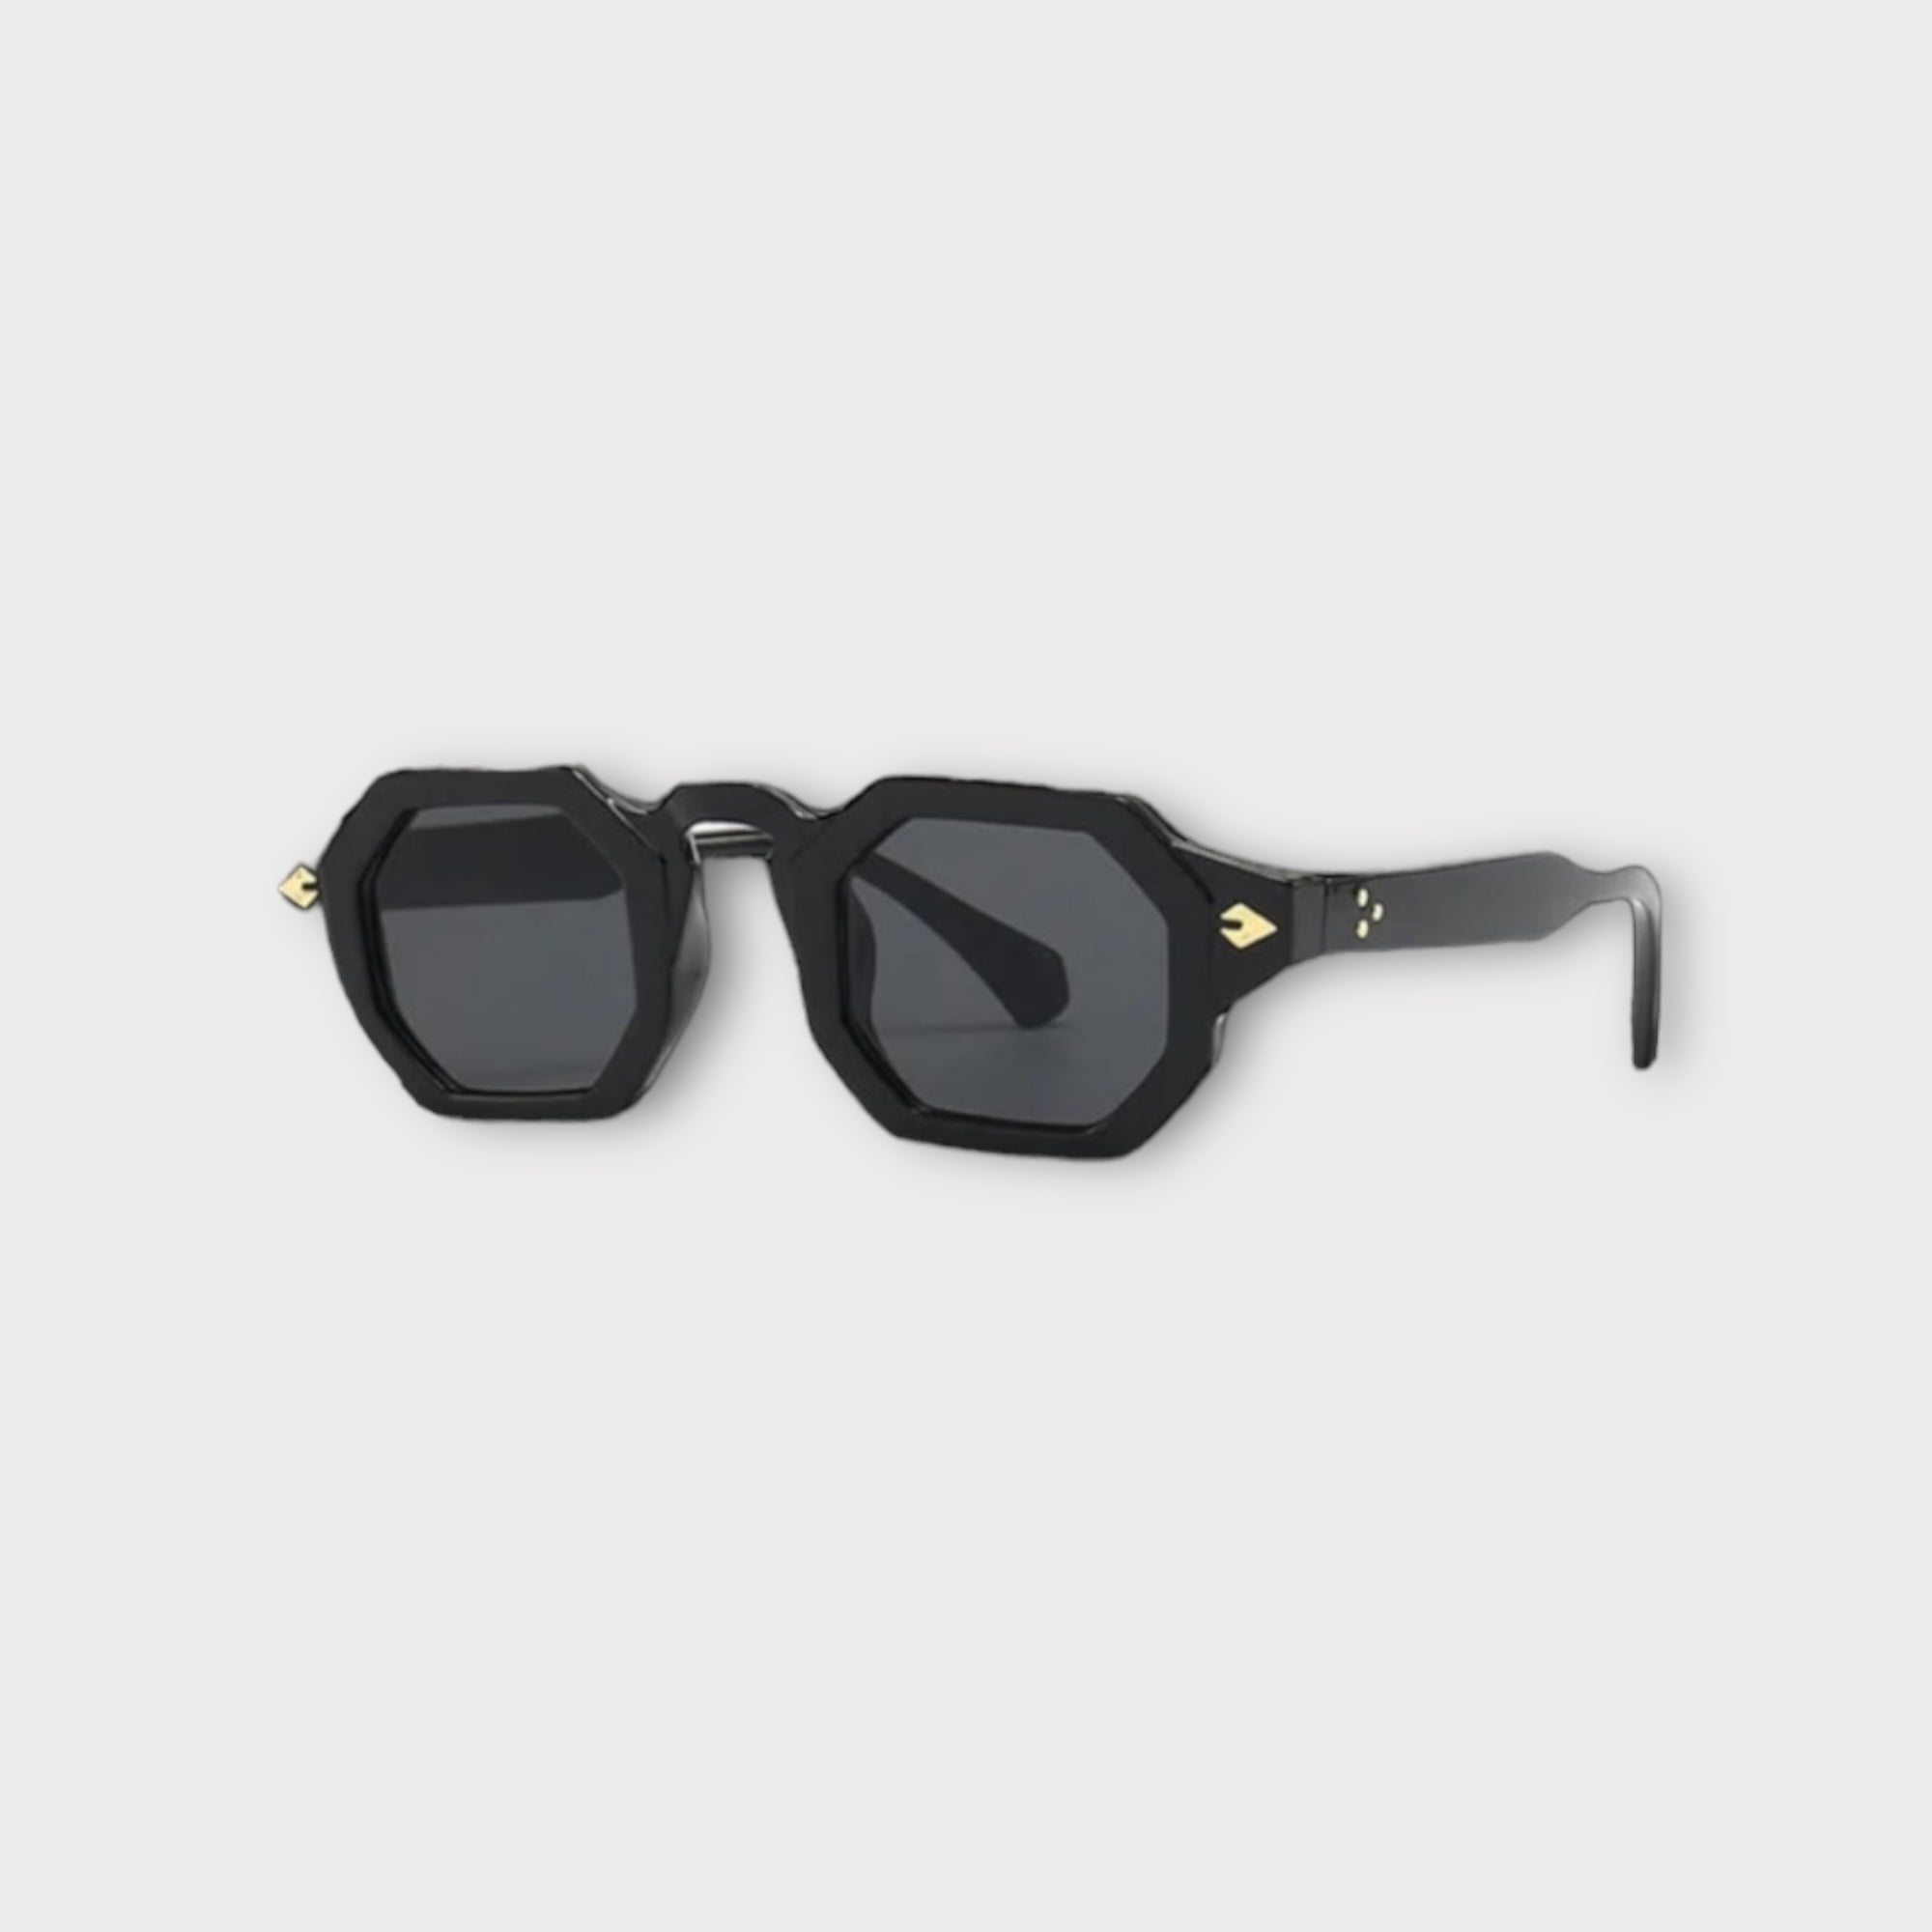 'GLAR' Square shades sunglasses for women